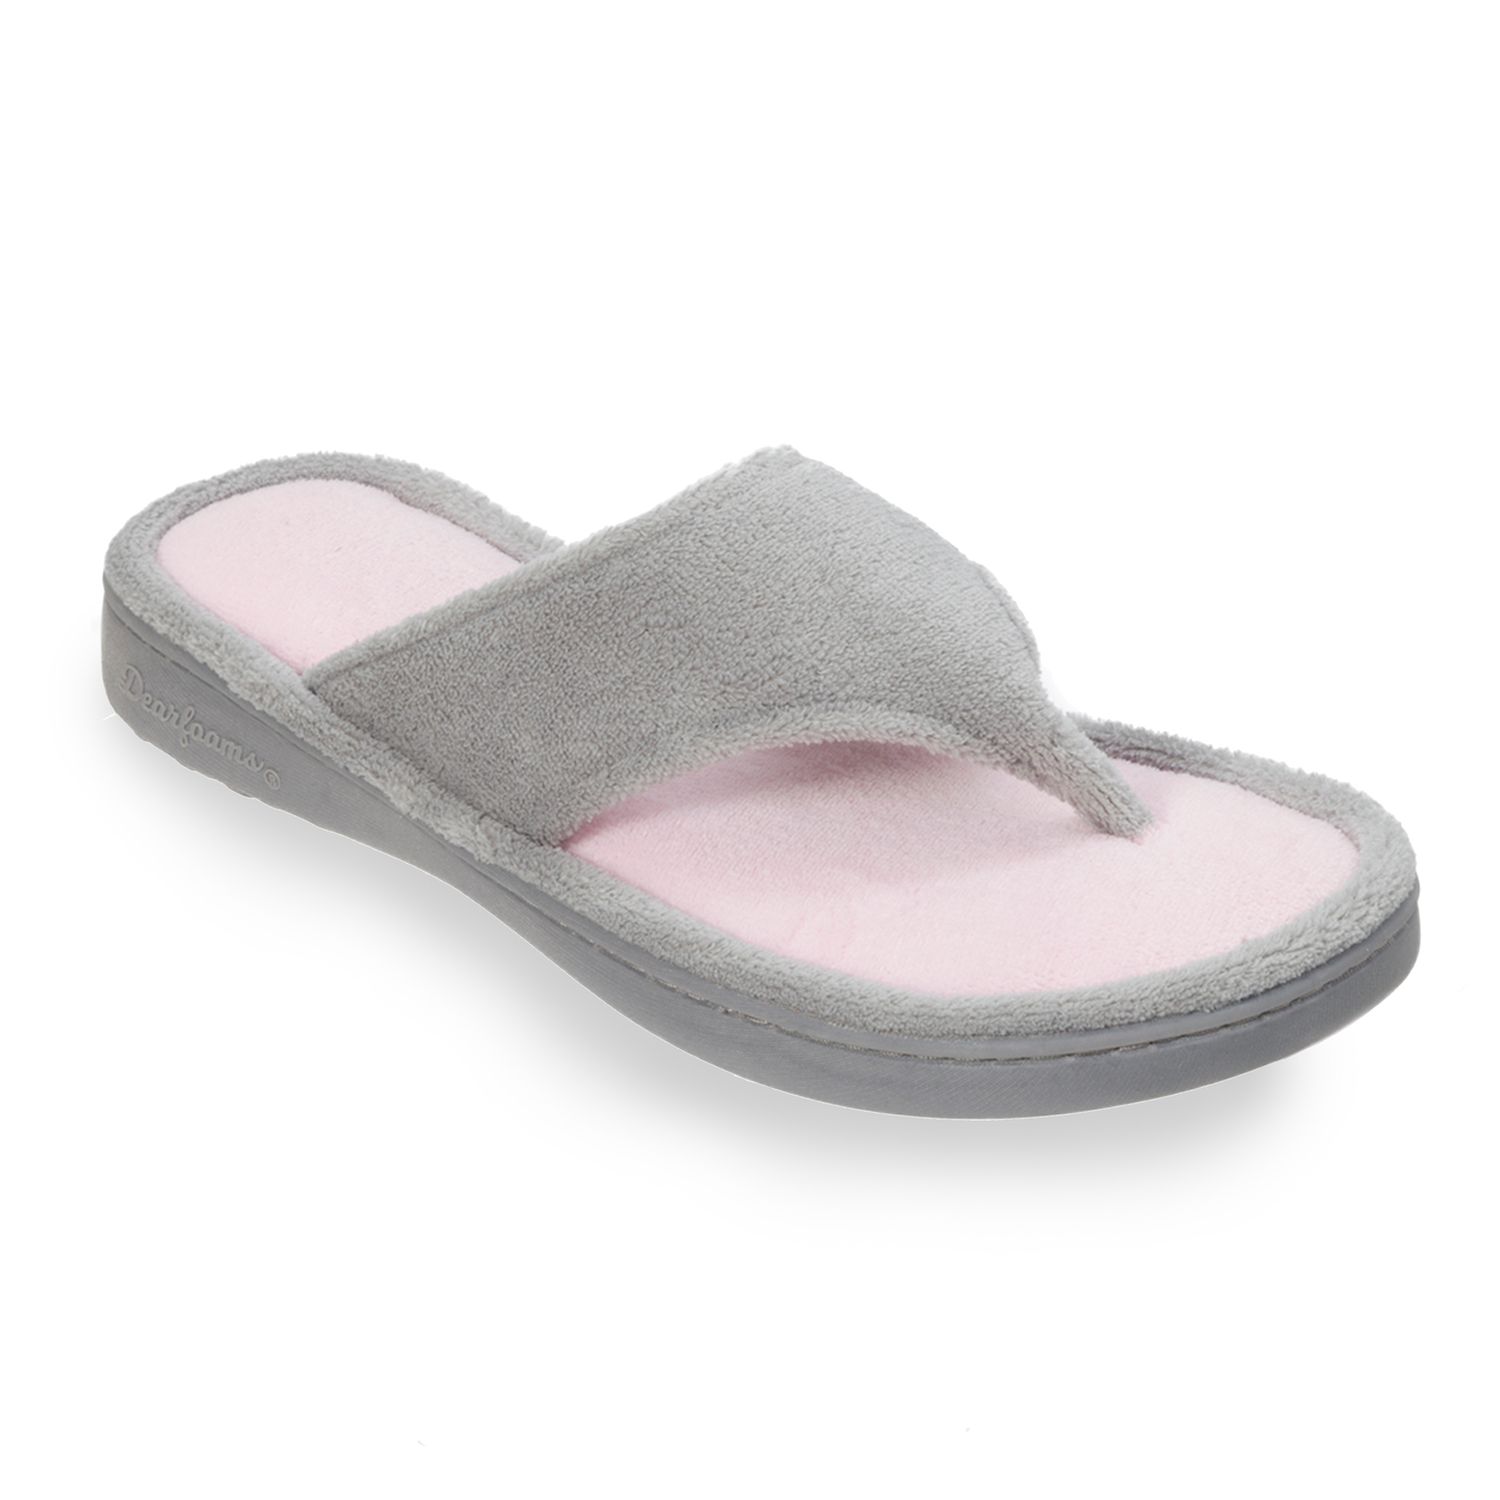 dearfoams women's terry thong slippers